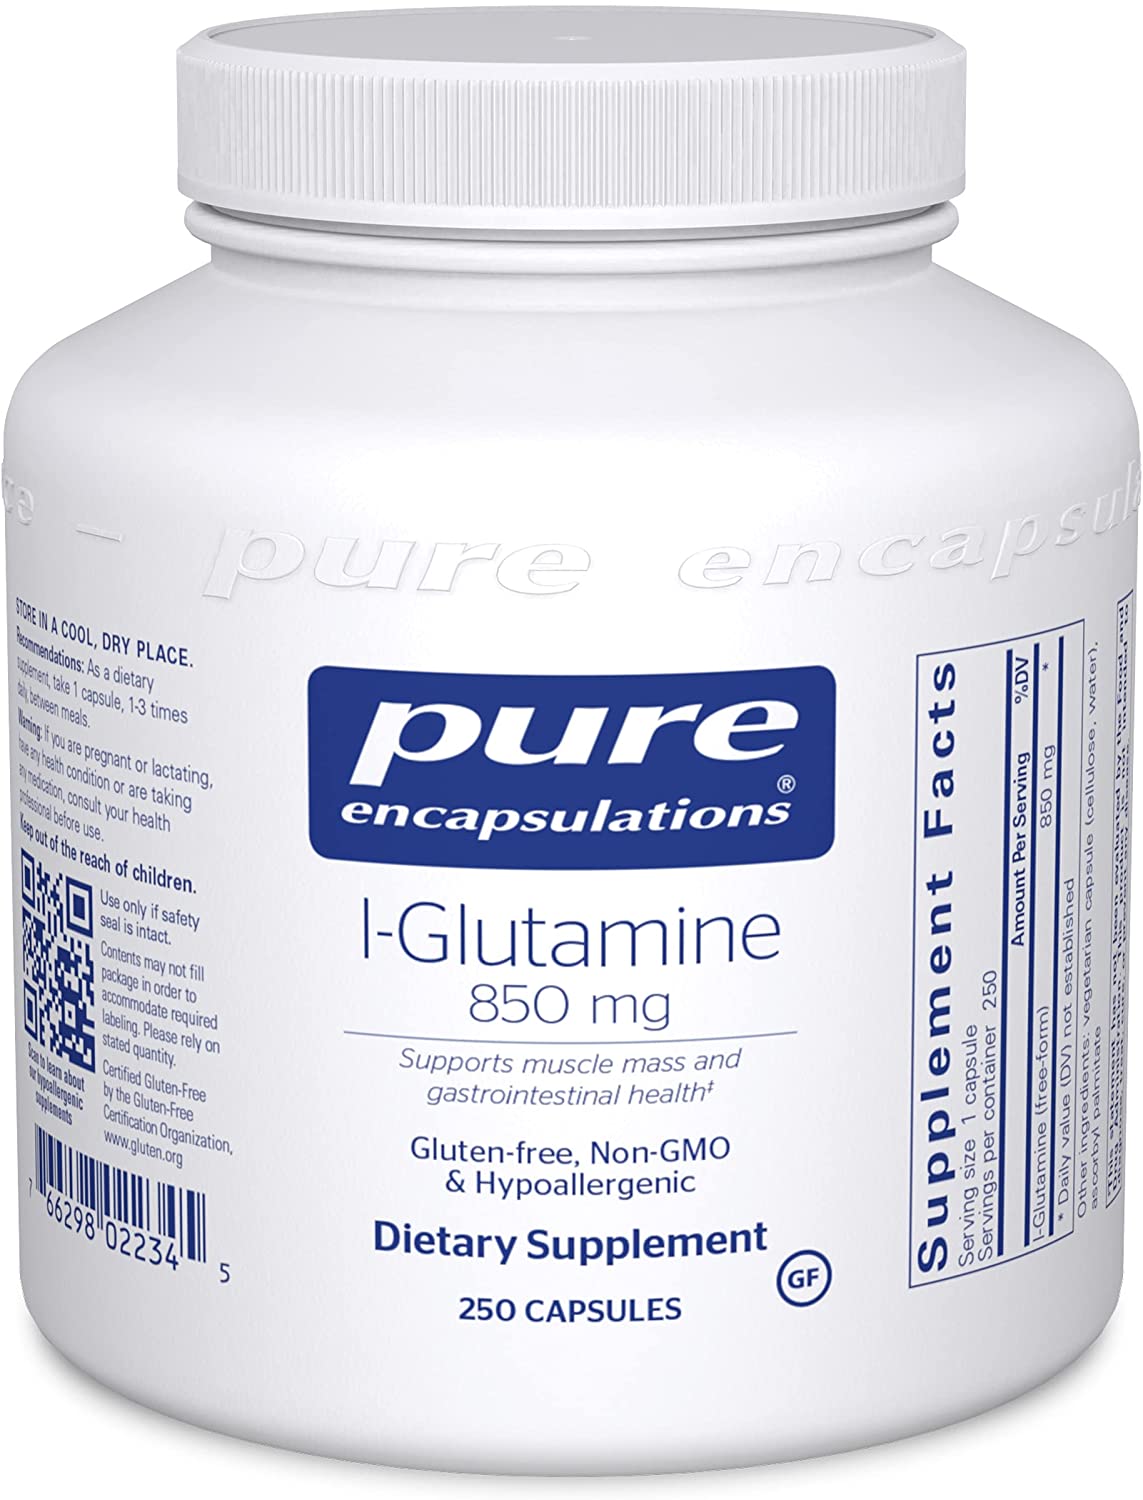 l-Glutamine-850mg-250s